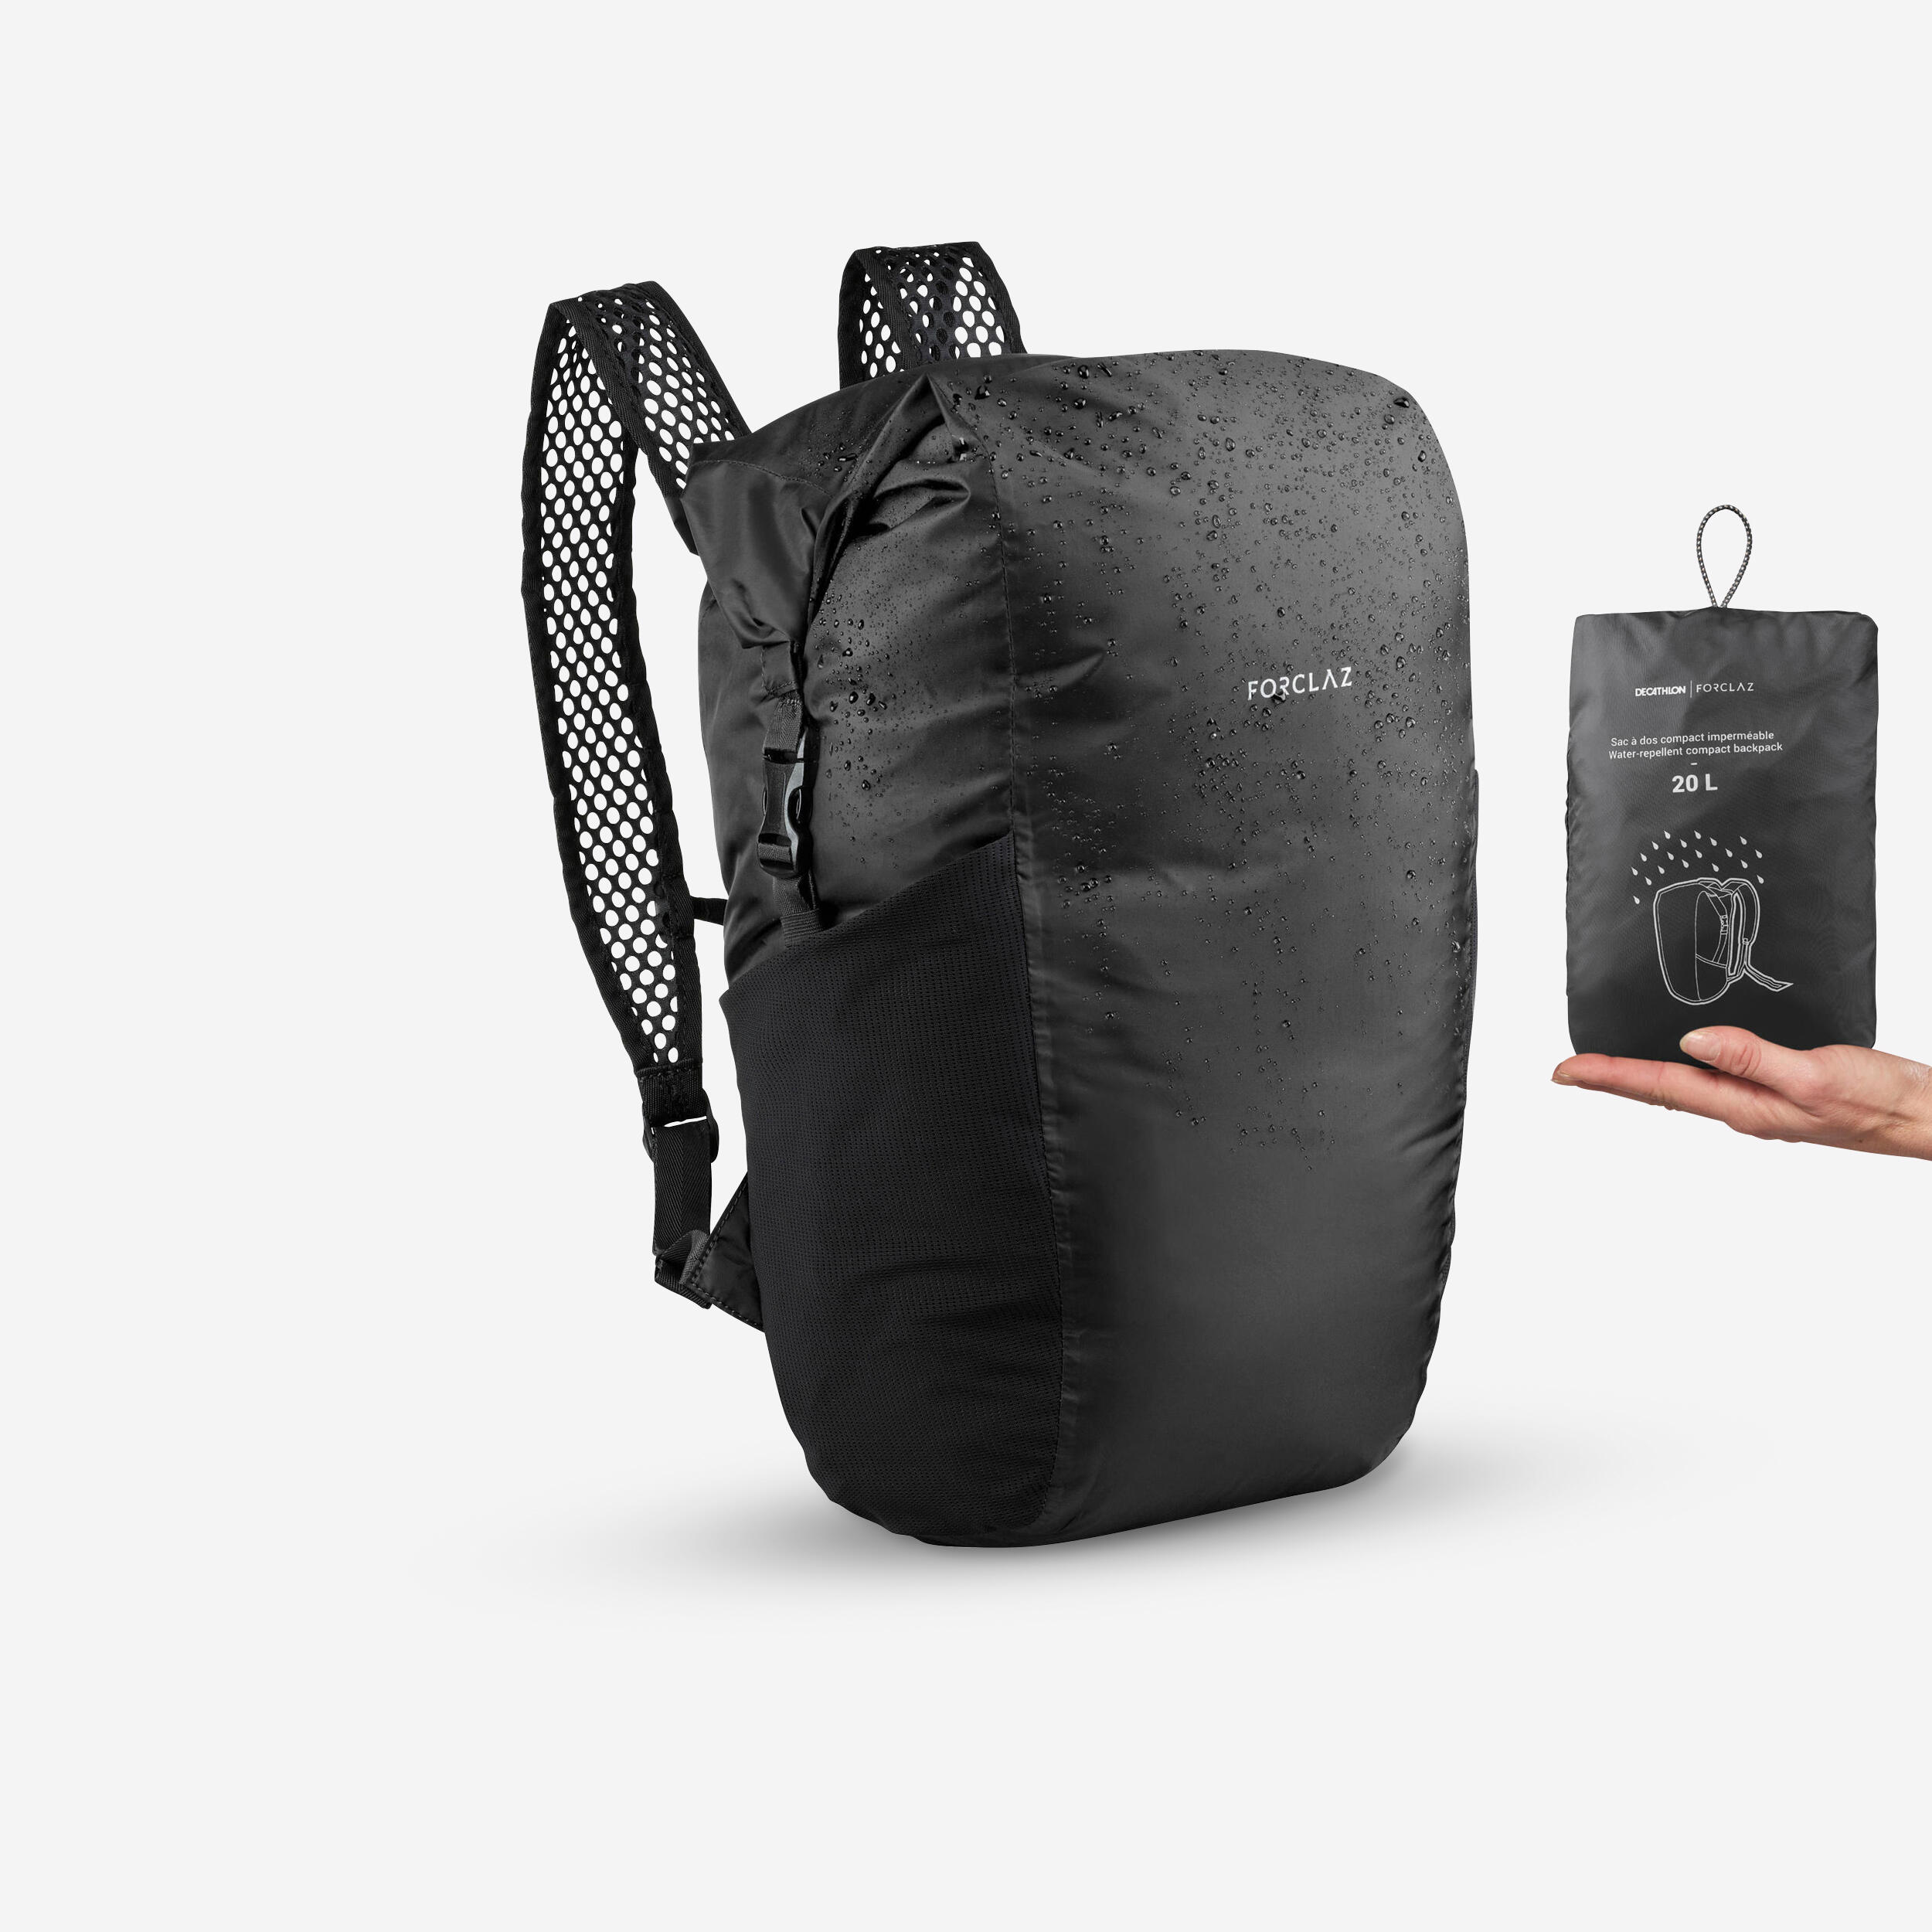 Waterproof foldable backpack 20L - Travel 1/8